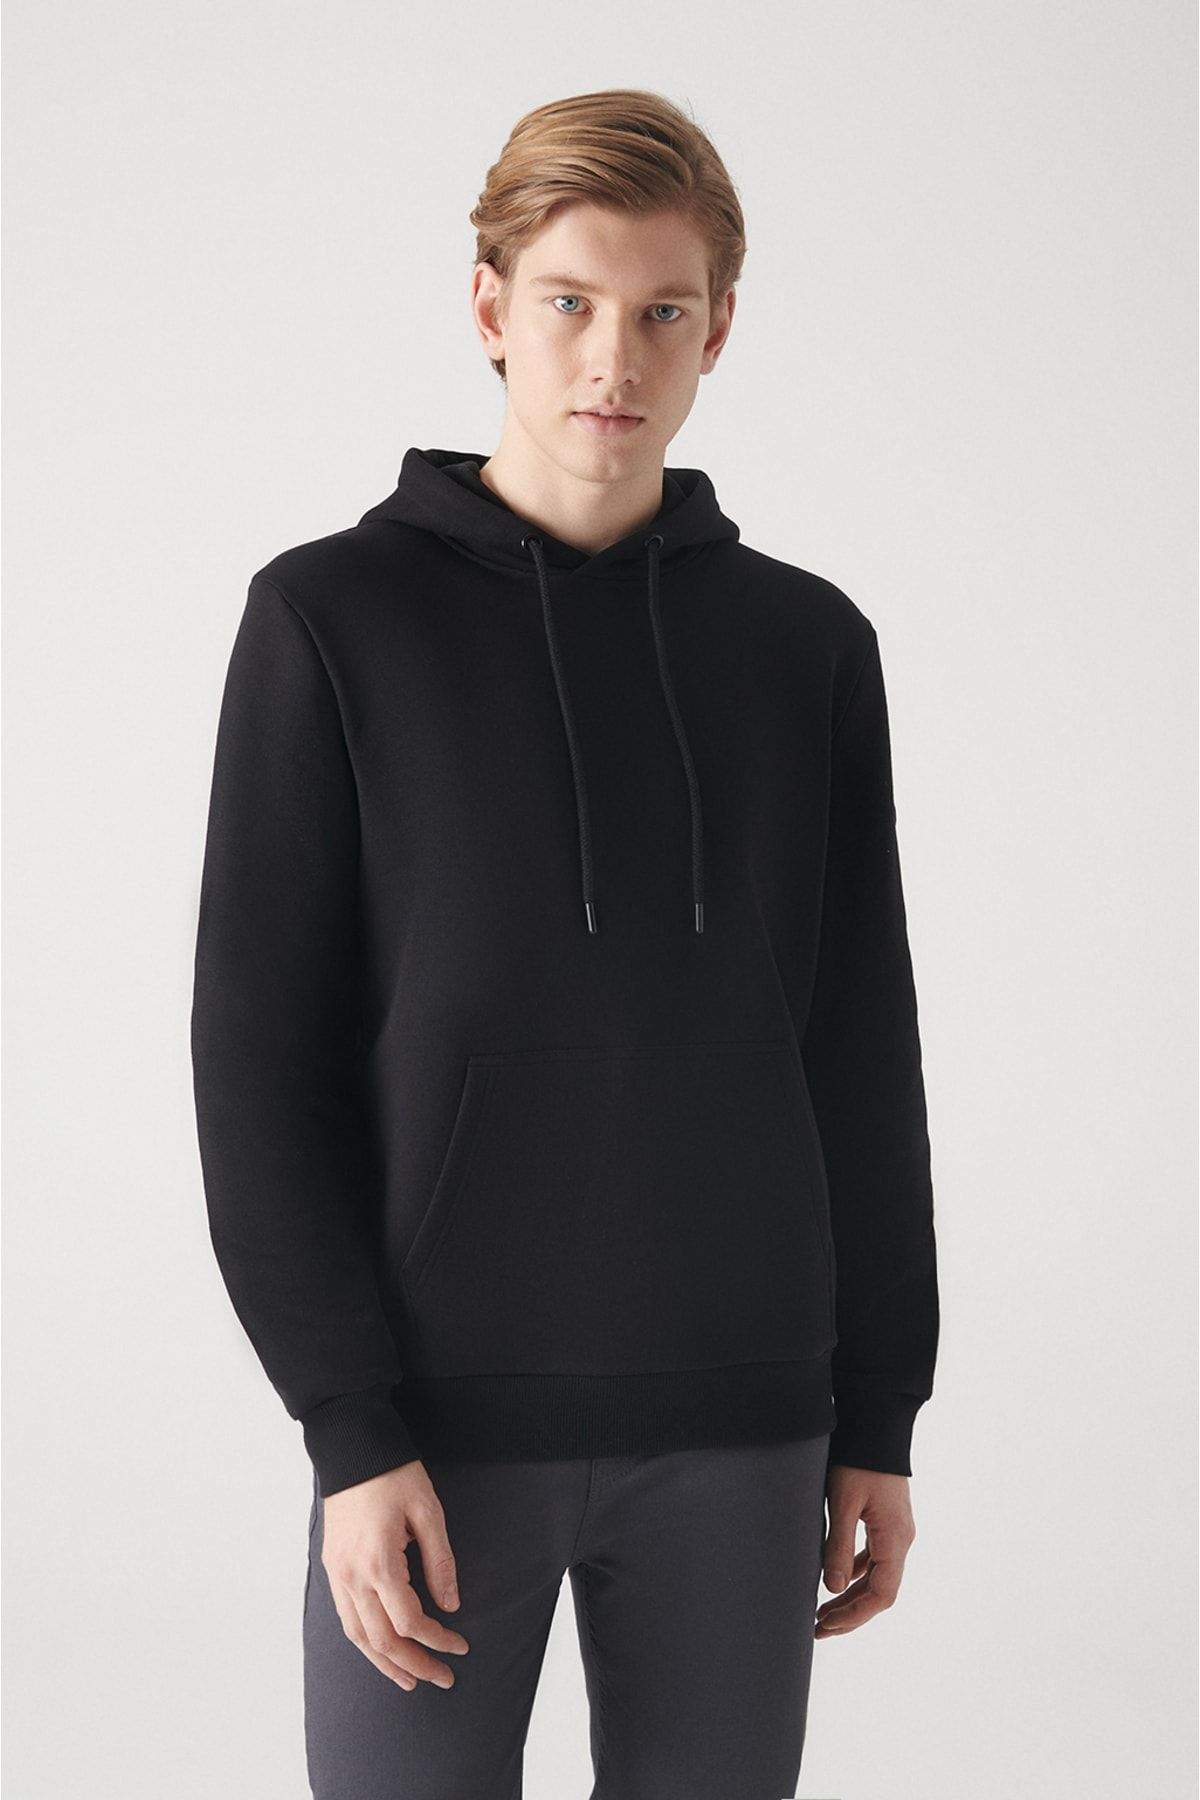 mens-black-hooded-collar-3-thread-back-printed-sweatshirt-a22y1111